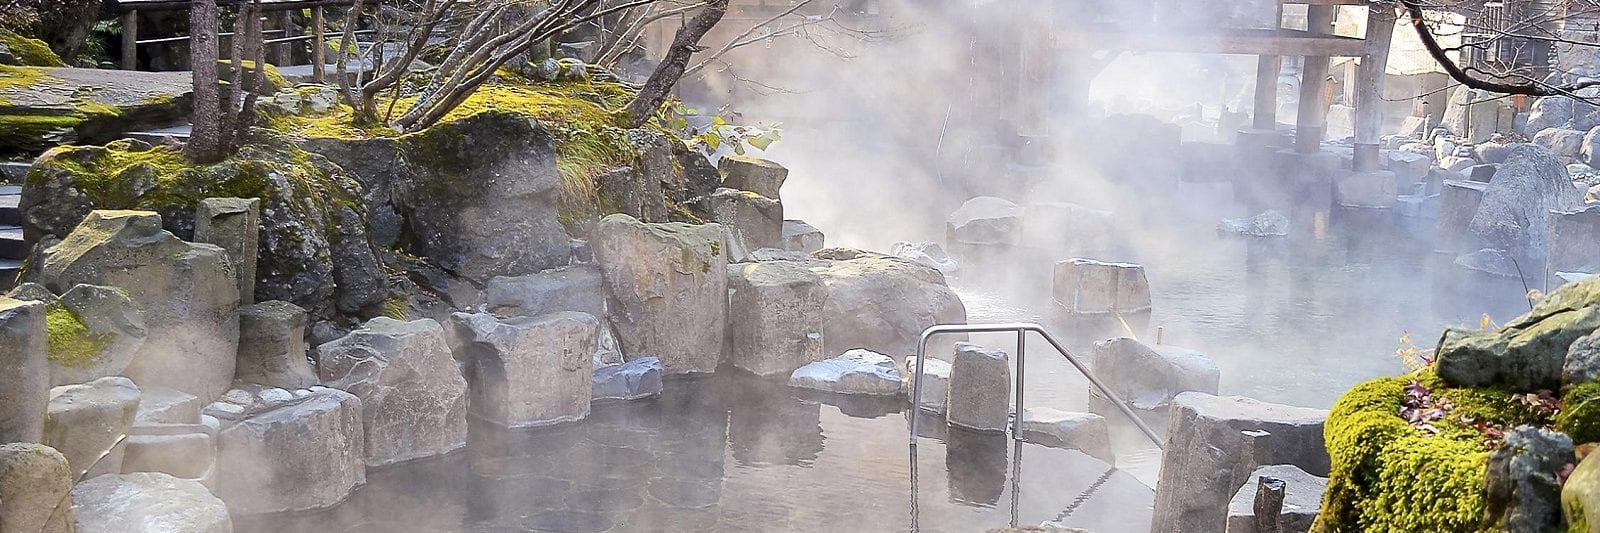 tasmania hot springs